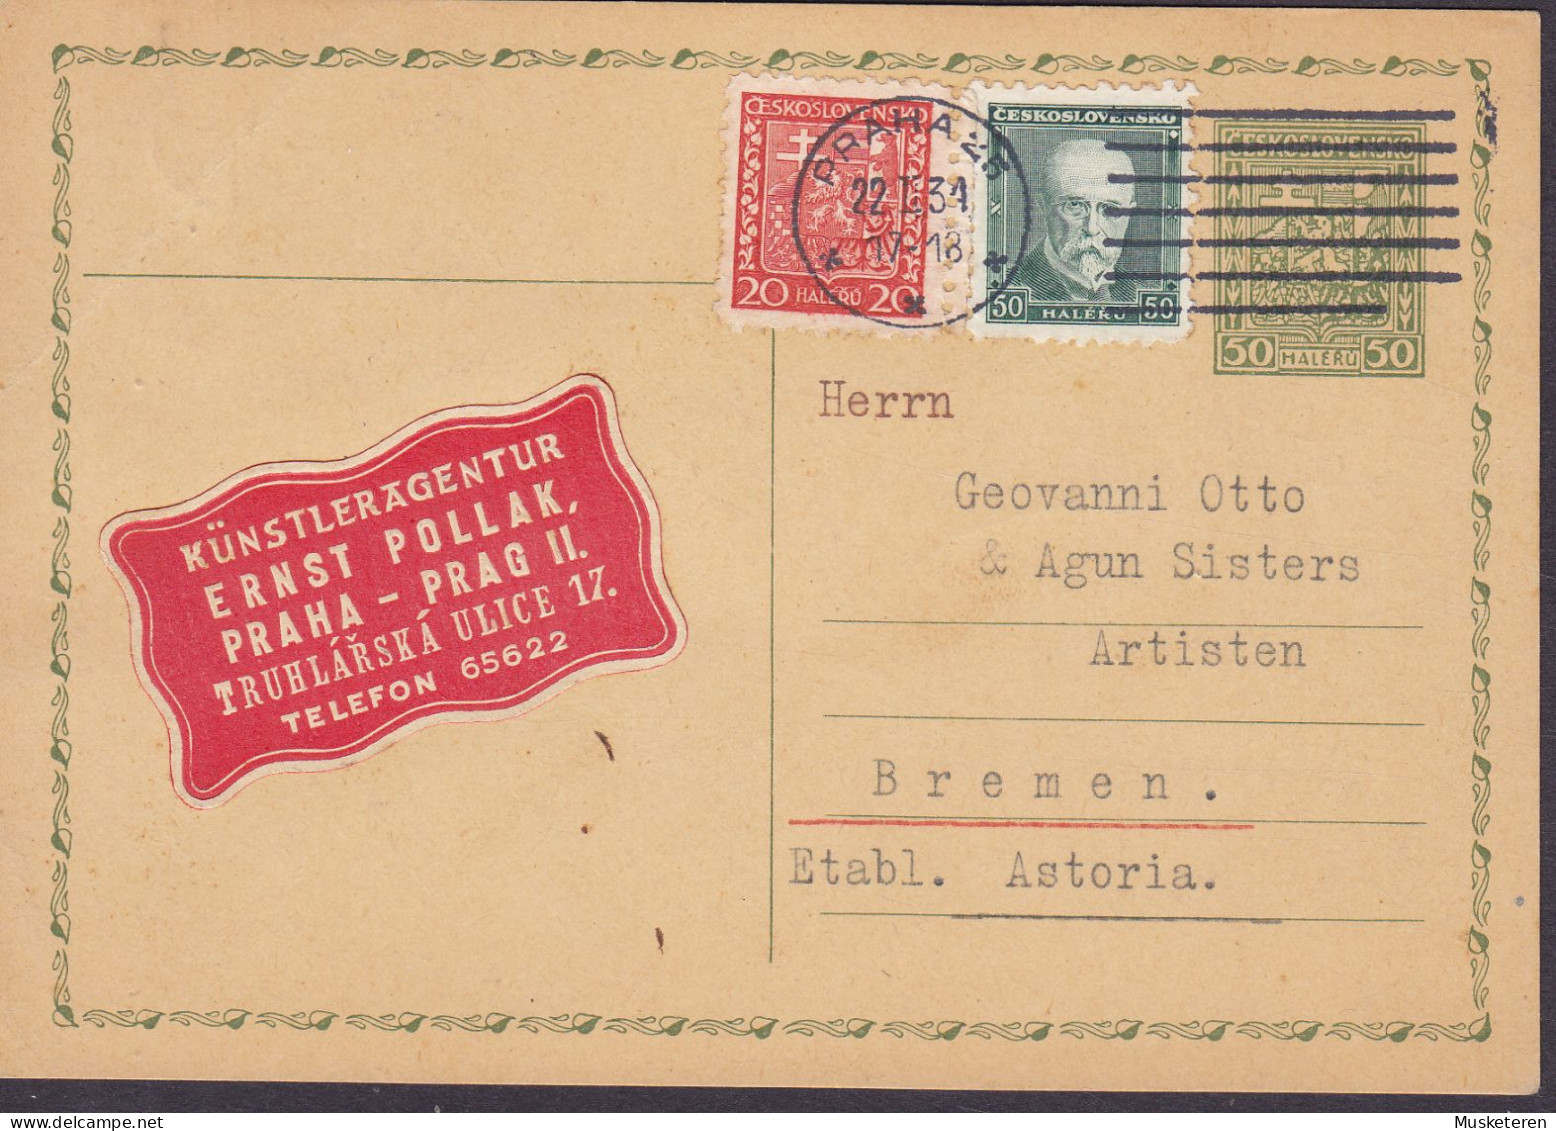 Czechoslovakia Uprated Postal Stationery Ganzsache Künstleragentur ERNST POLLAK Vignette PRAHA Prag 1934 BUDAPEST - Cartes Postales